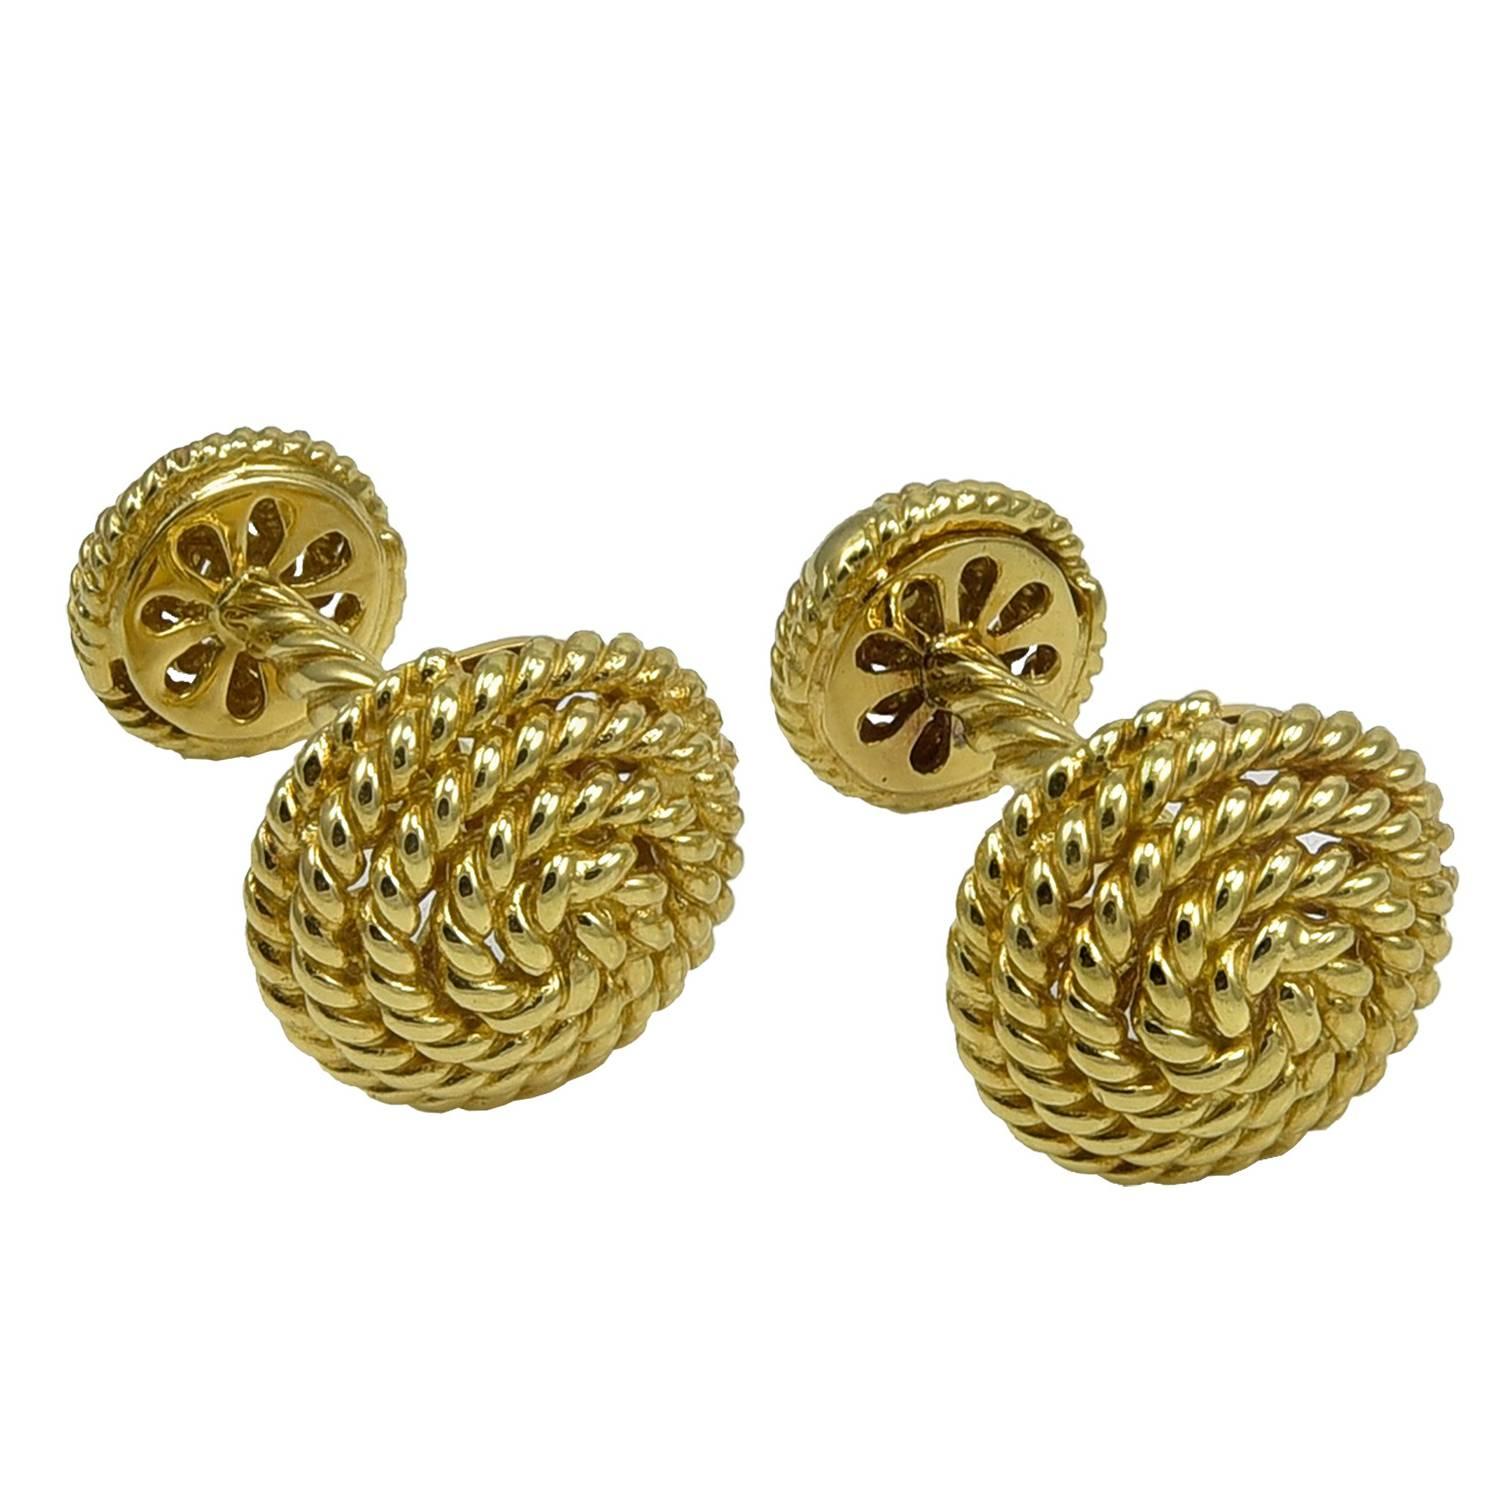 Tiffany & Co. Gold Swirl Pattern Cufflinks